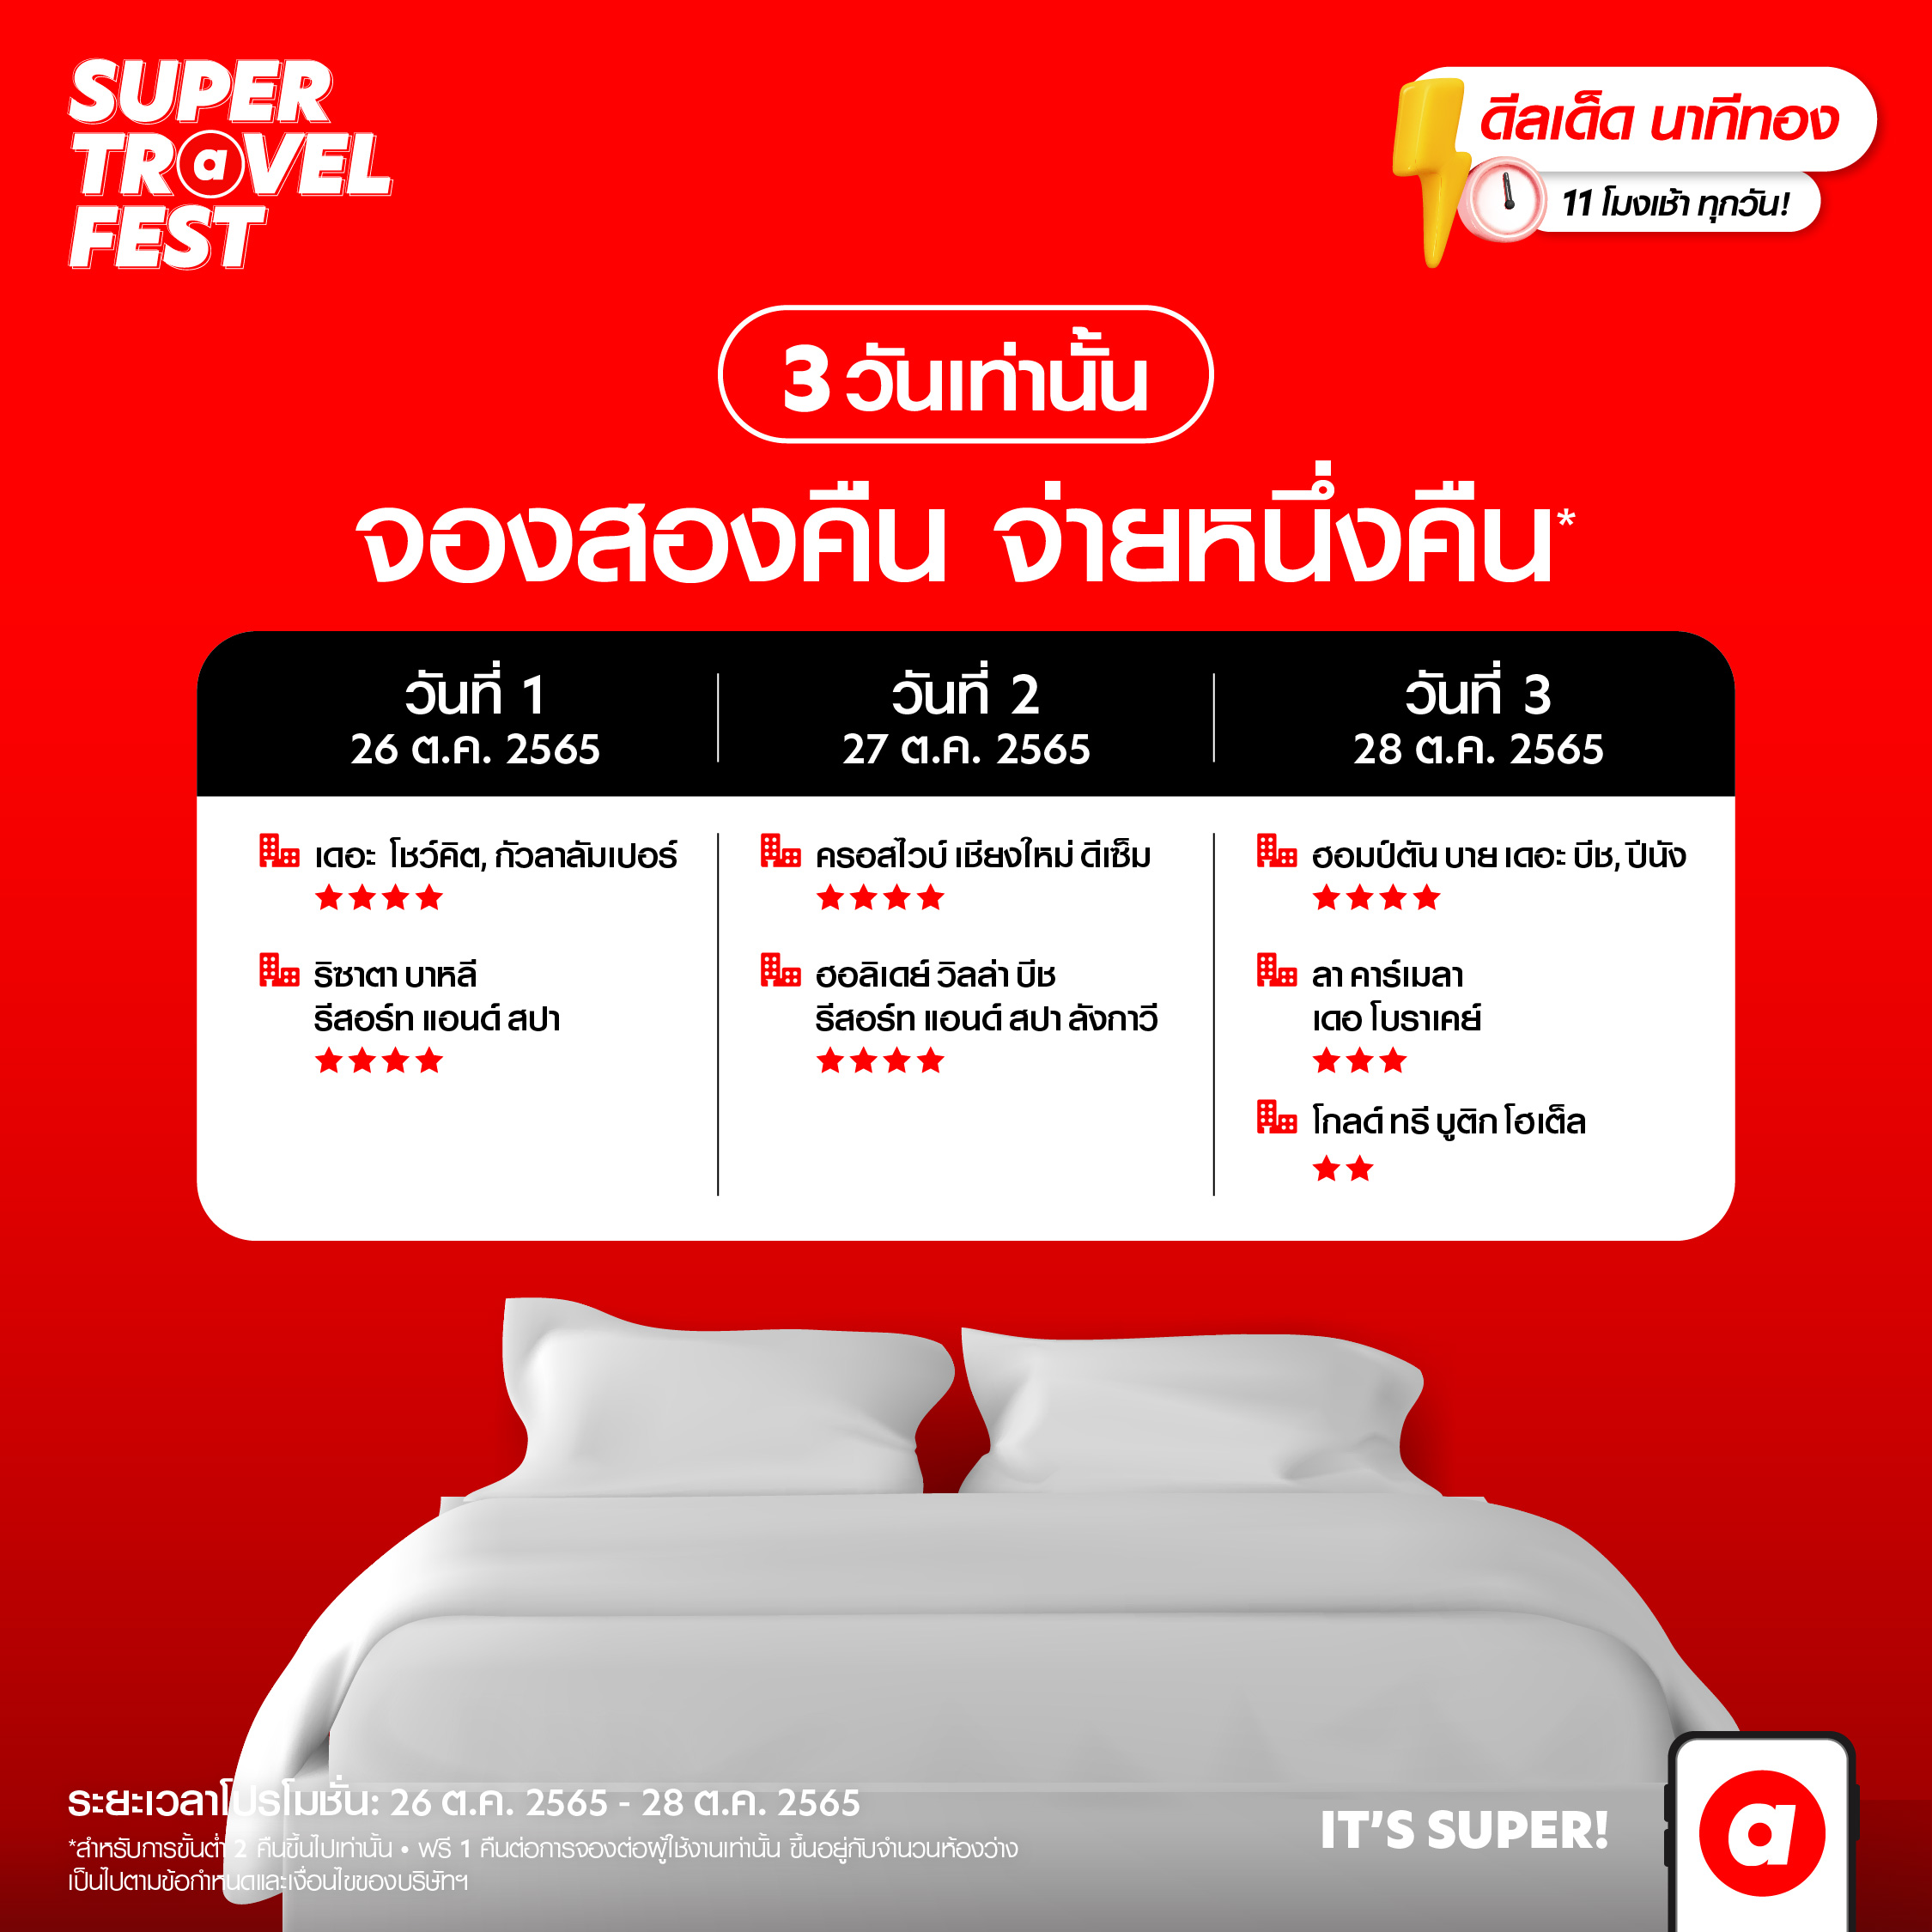 TH Super Hour Deal | airasia super app | airasia Super App ตั้งเป้าเป็นแพลตฟอร์มจองโรงแรมแข็งแกร่งสุดในอาเซียน